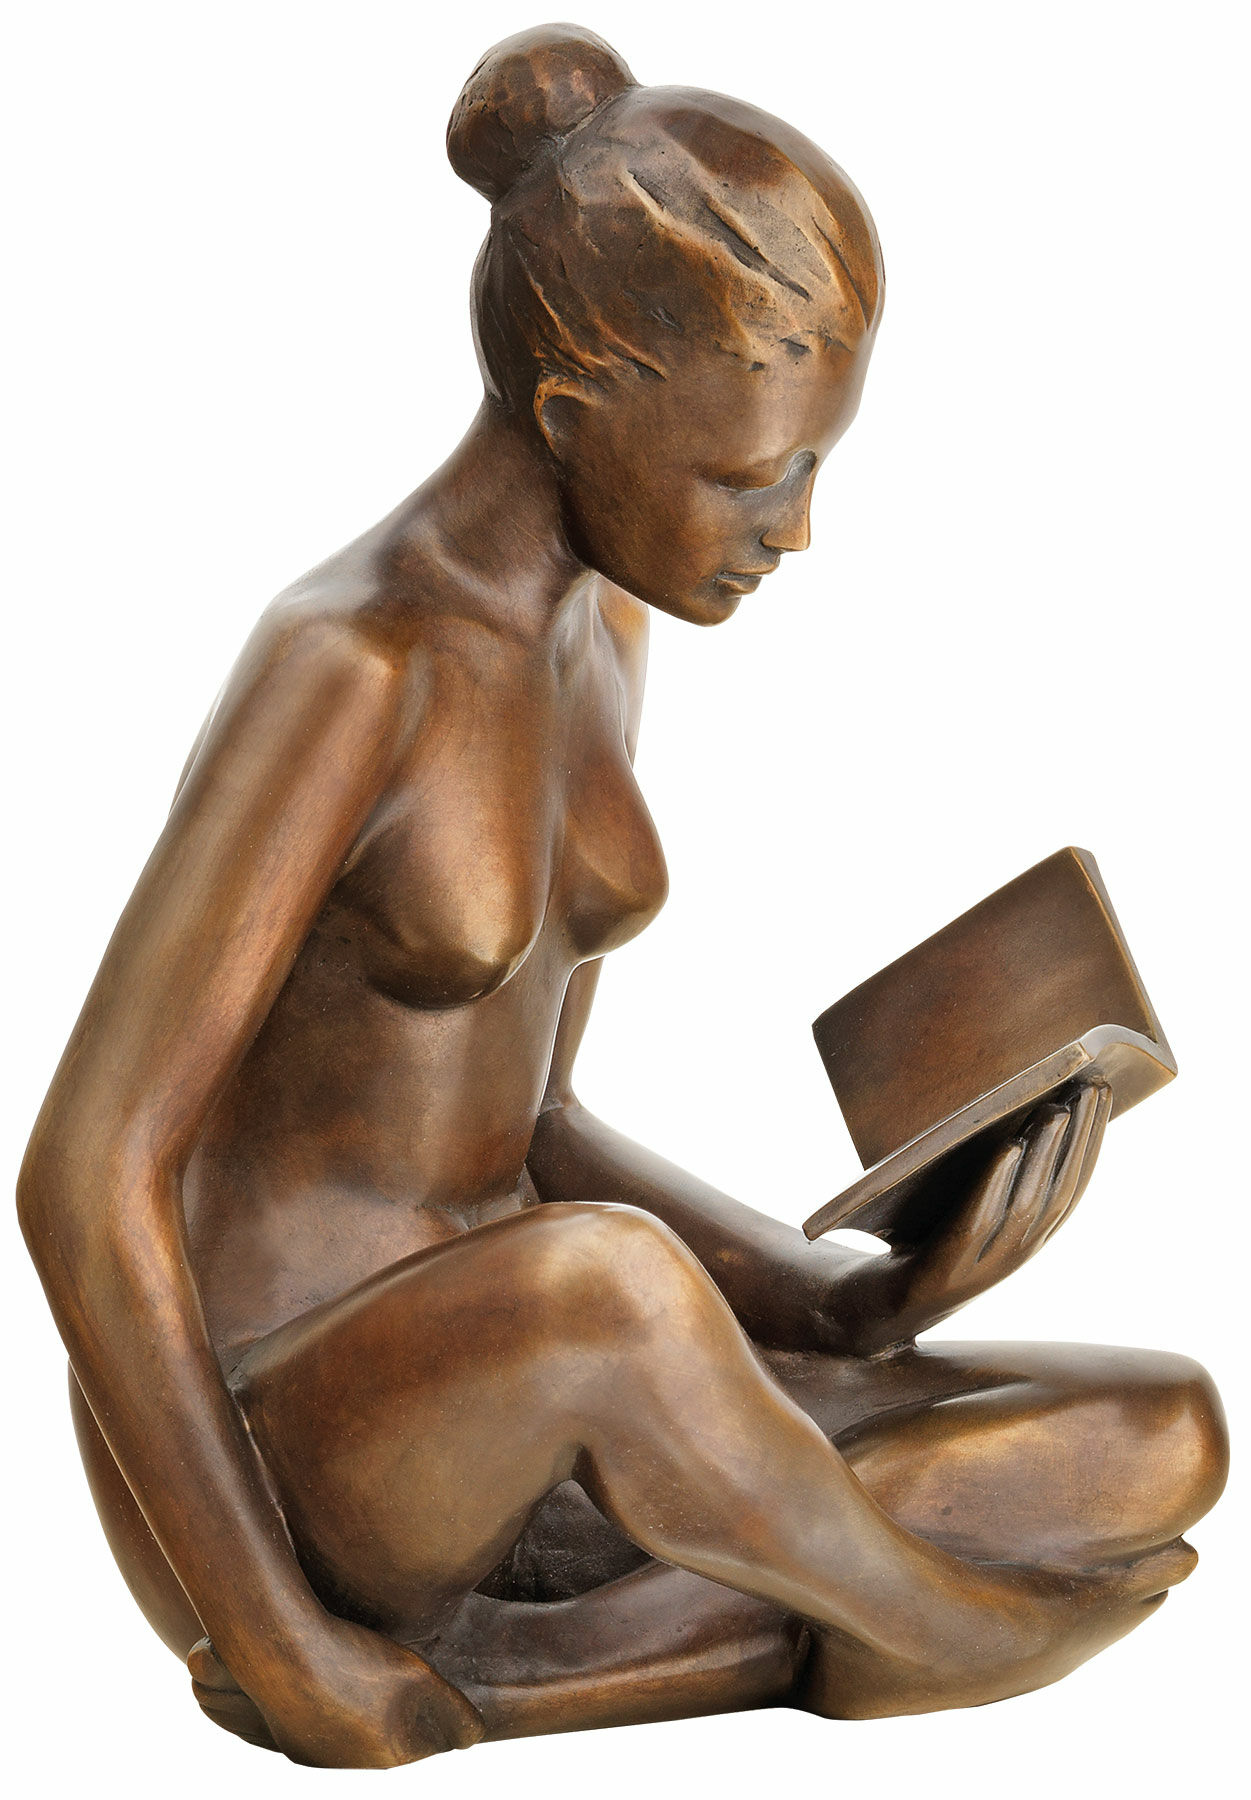 Skulptur "Läsande kvinna" (2018), brons von SIME